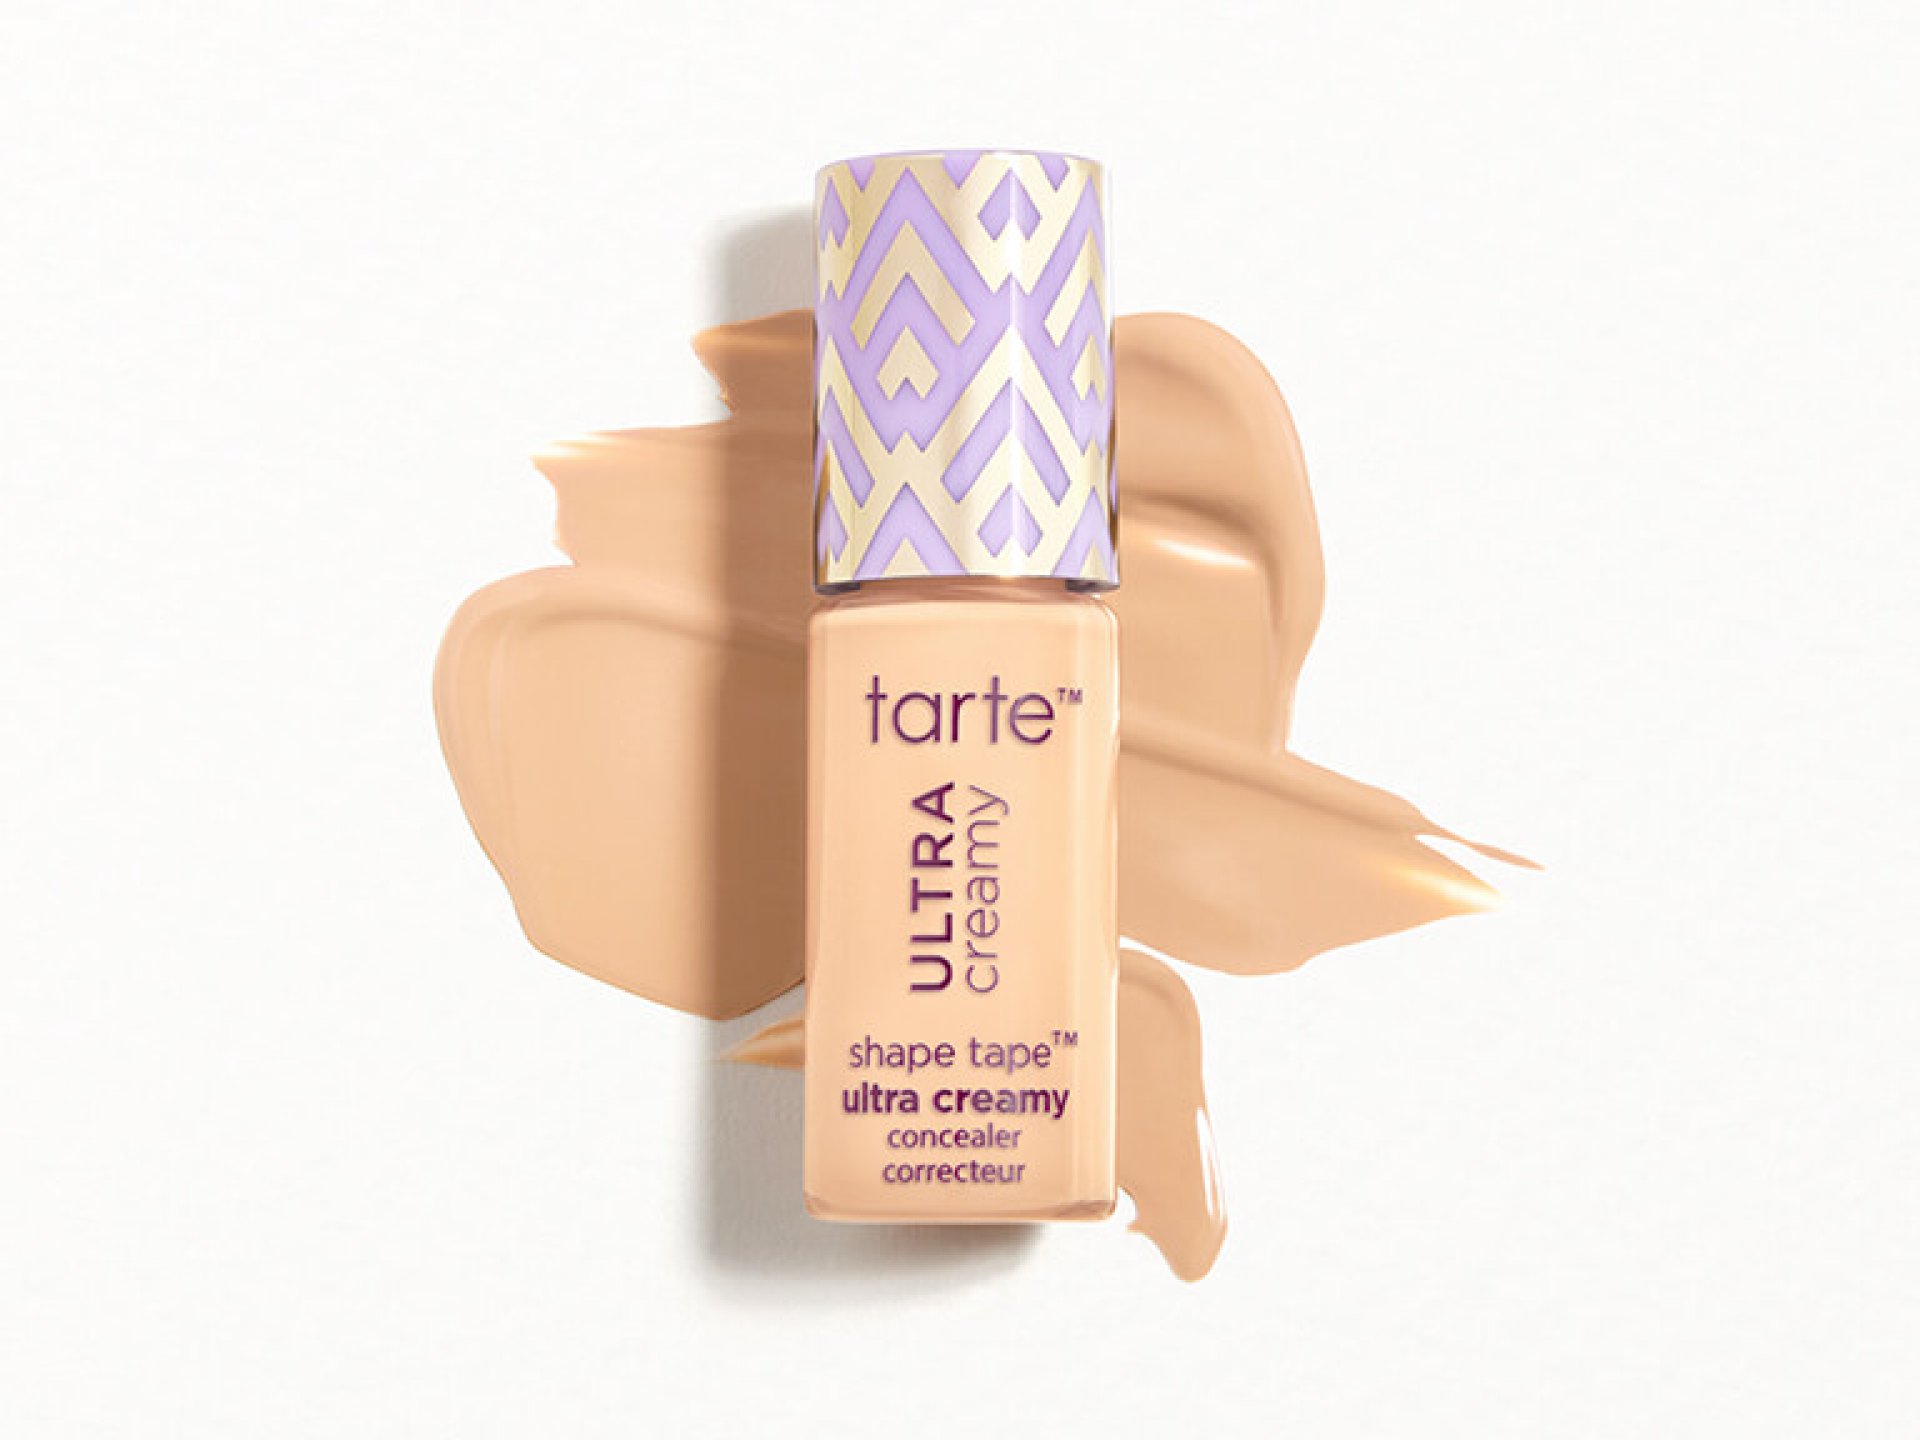 TARTE™ Shape Tape Ultra Creamy Concealer in 20S Light Sand